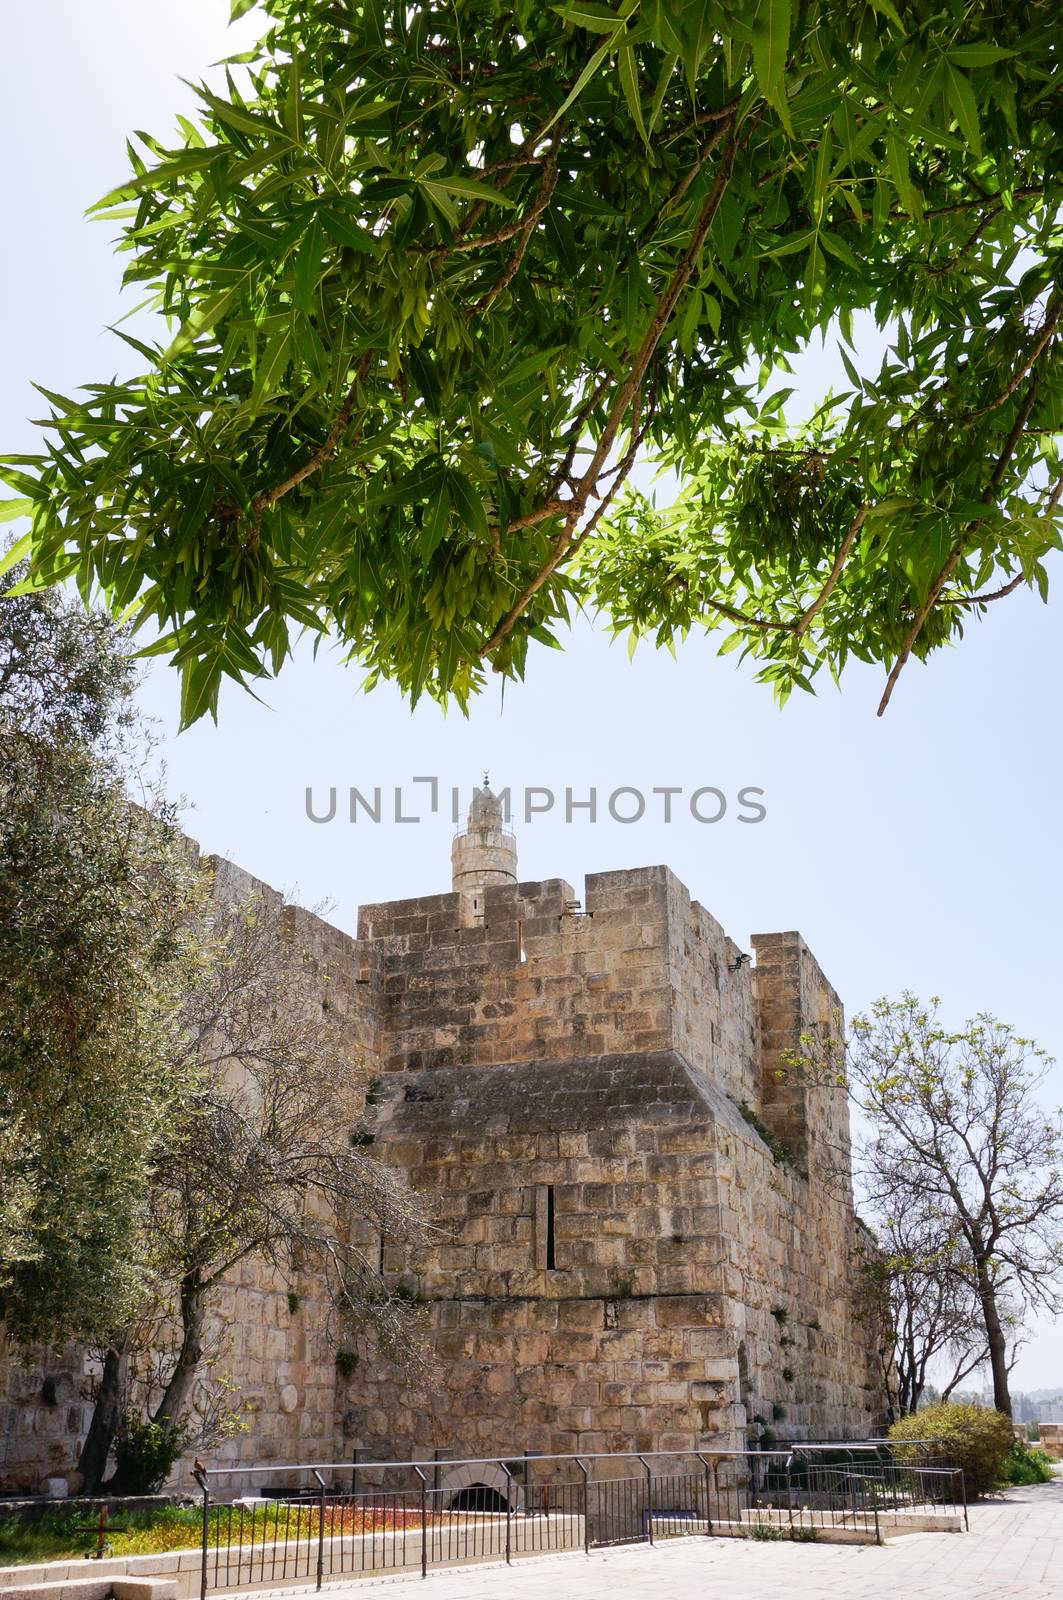 Tower of david and Jerusalem walls by javax